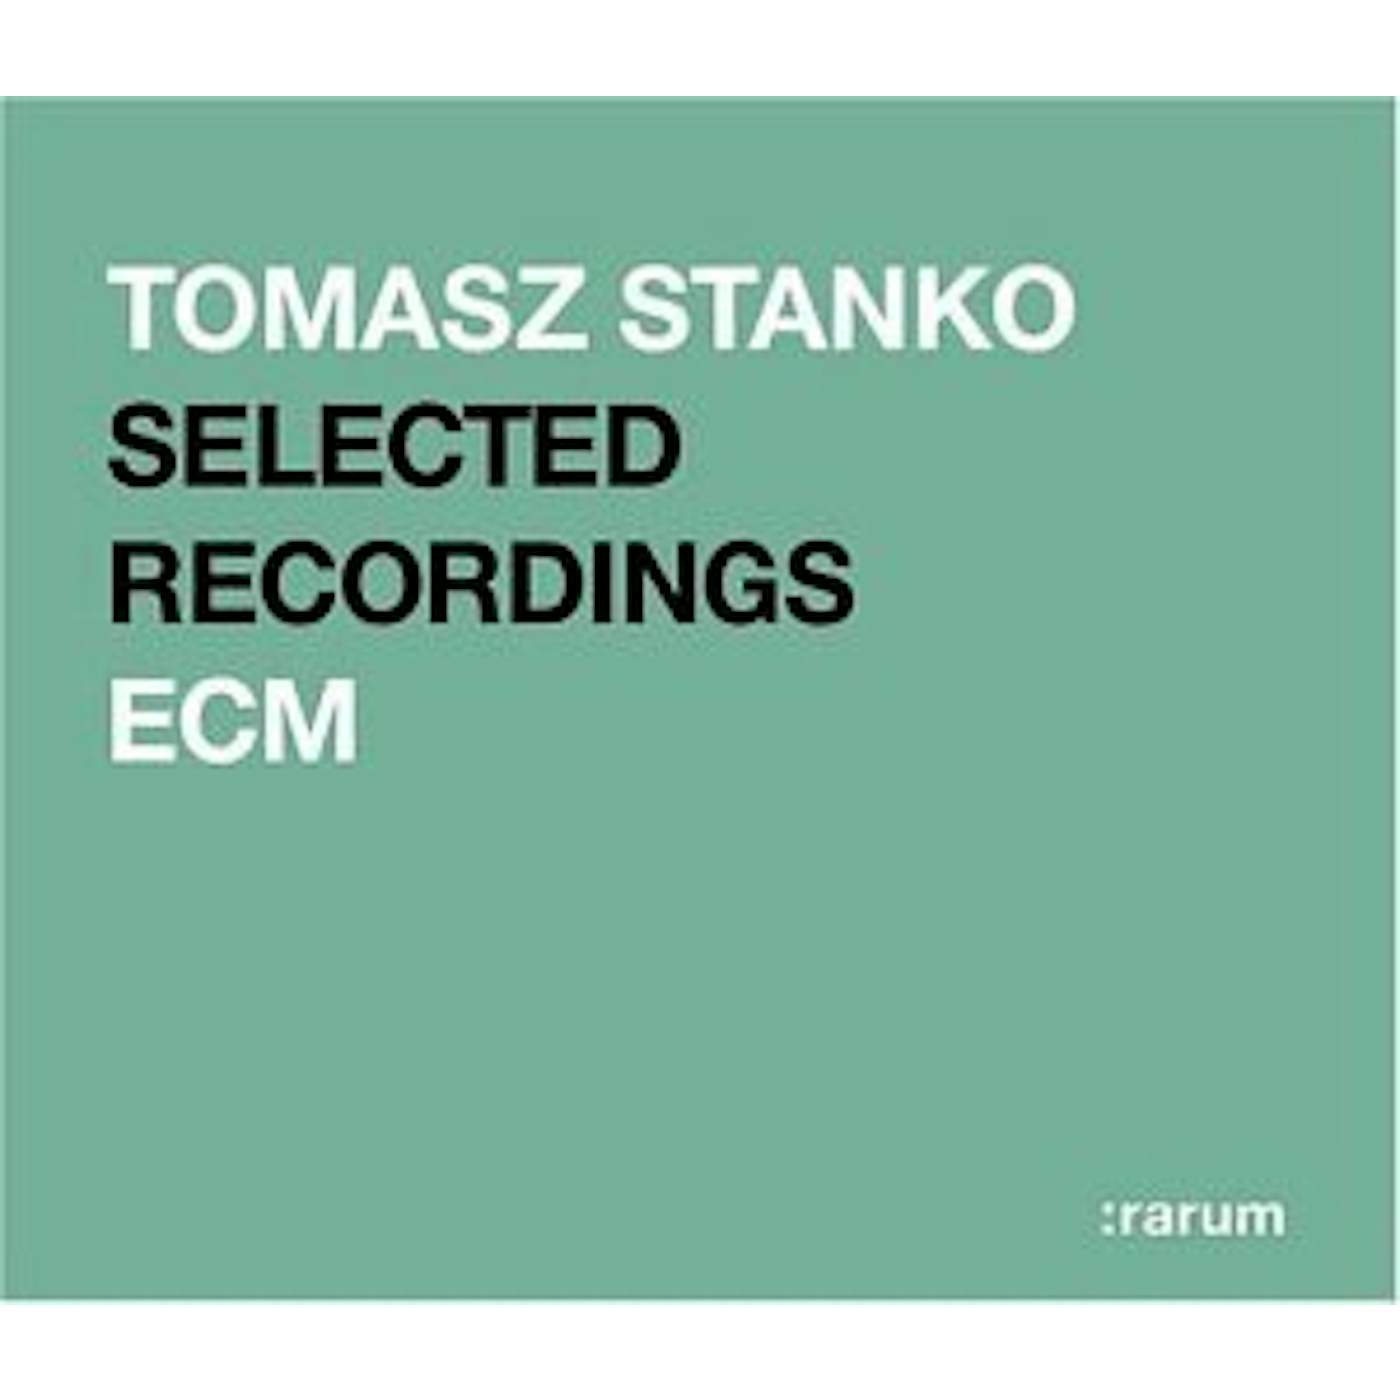 Tomasz Stańko RARUM XIV: SELECTED RECORDINGS CD